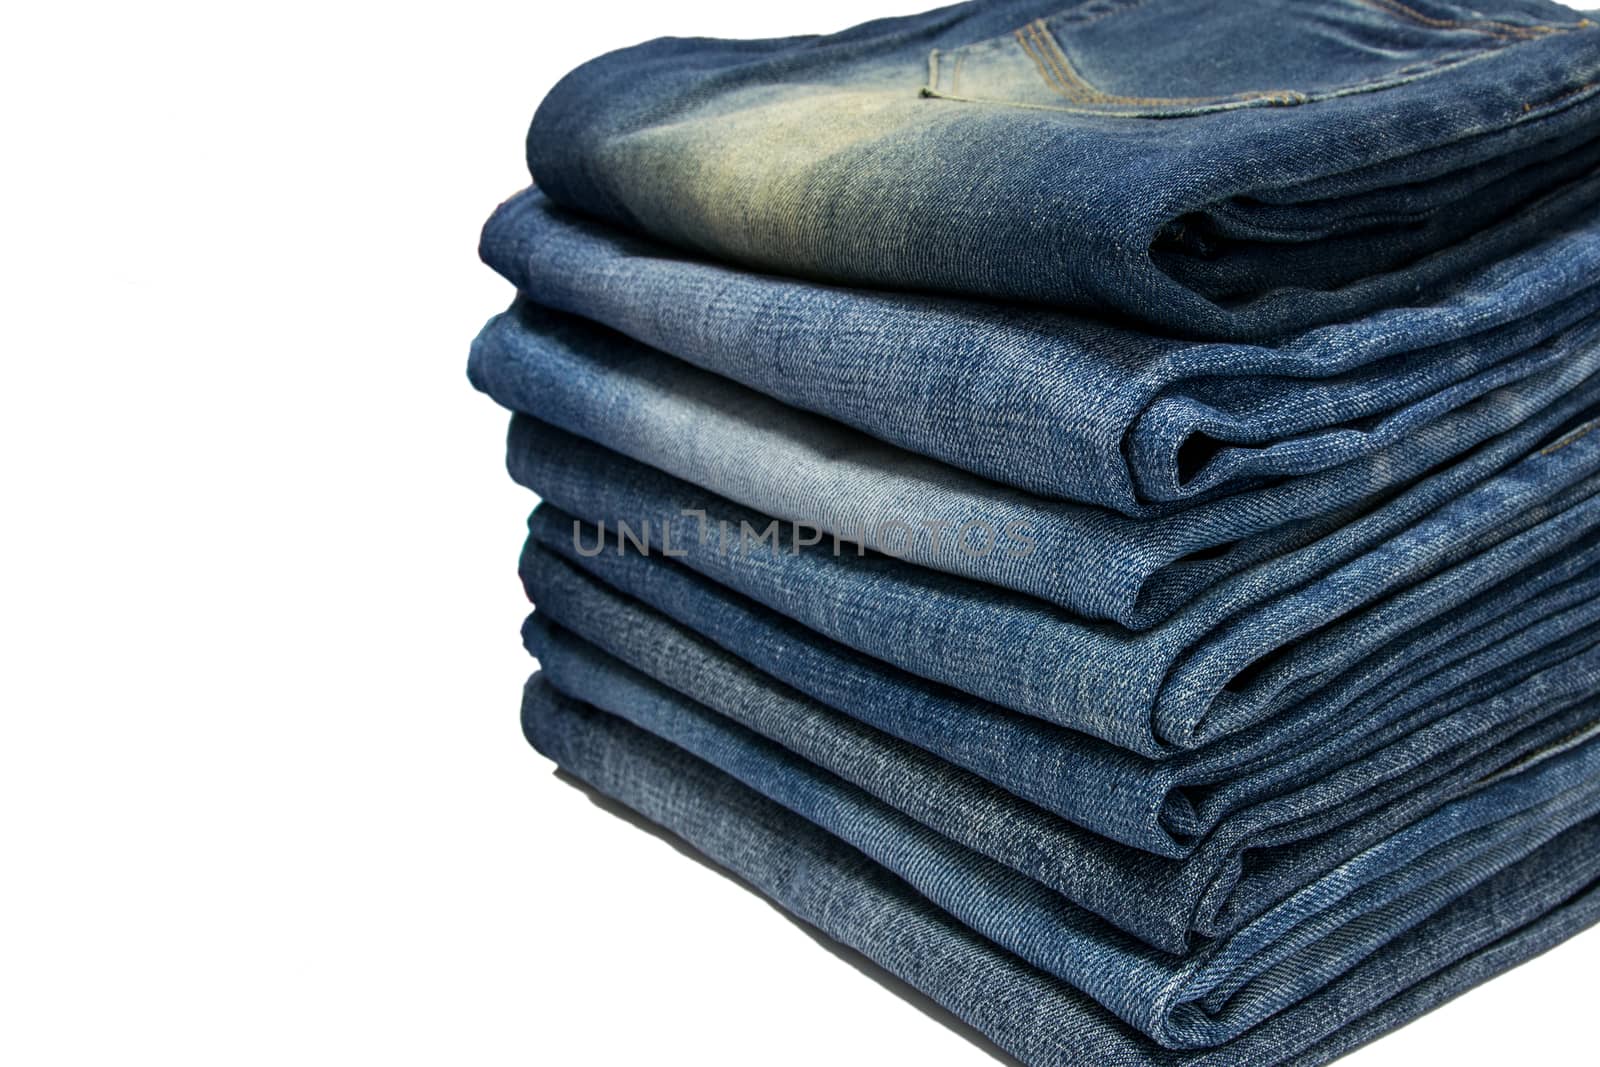 Blue jeans, long legs For men and women.